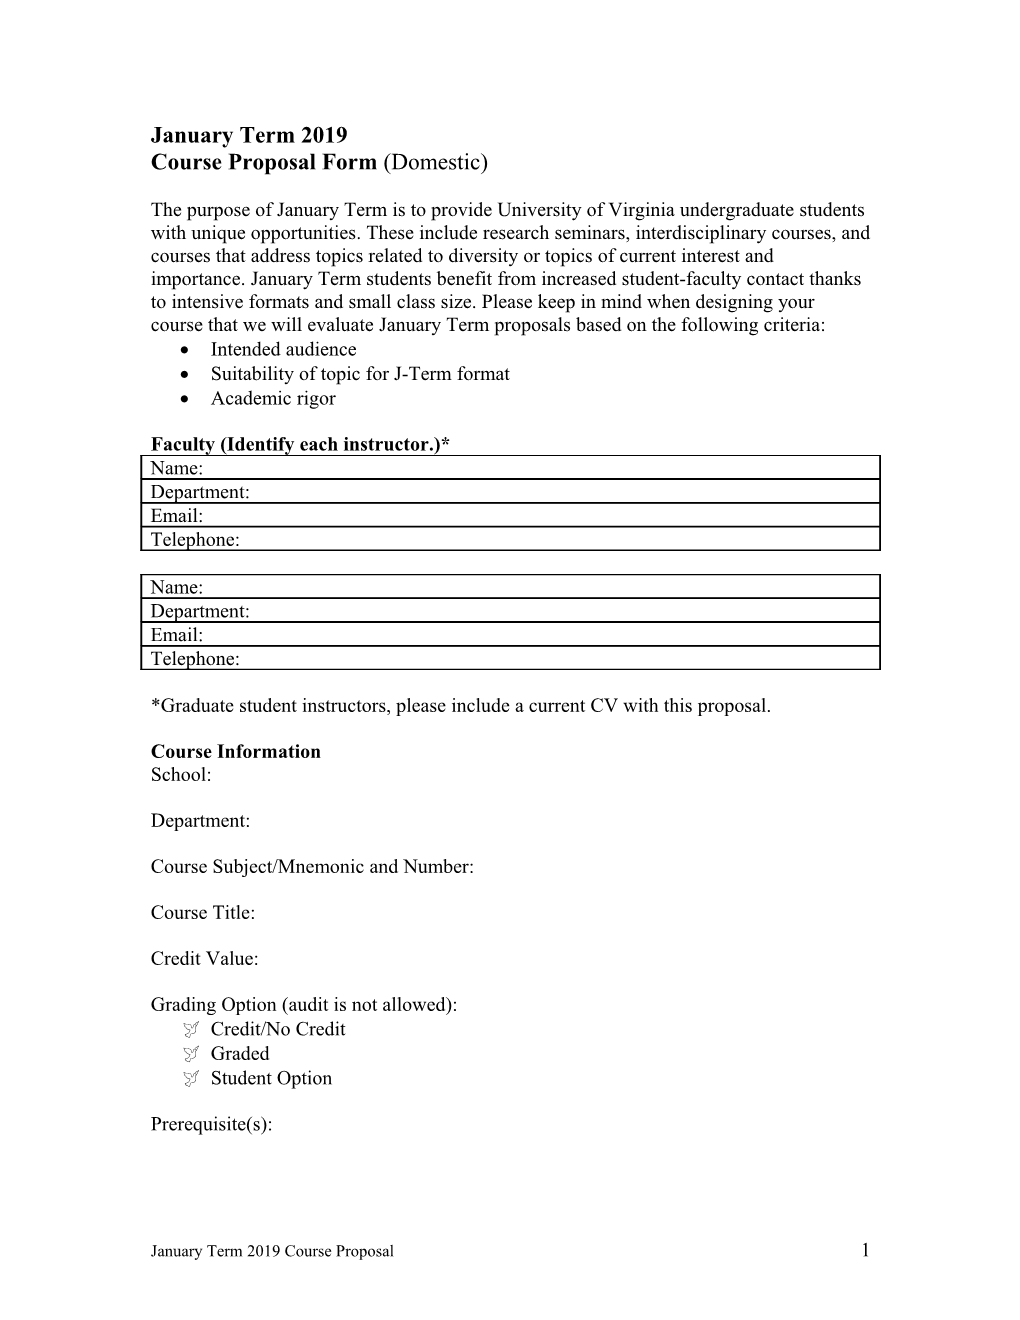 Course Proposal Form (Domestic)